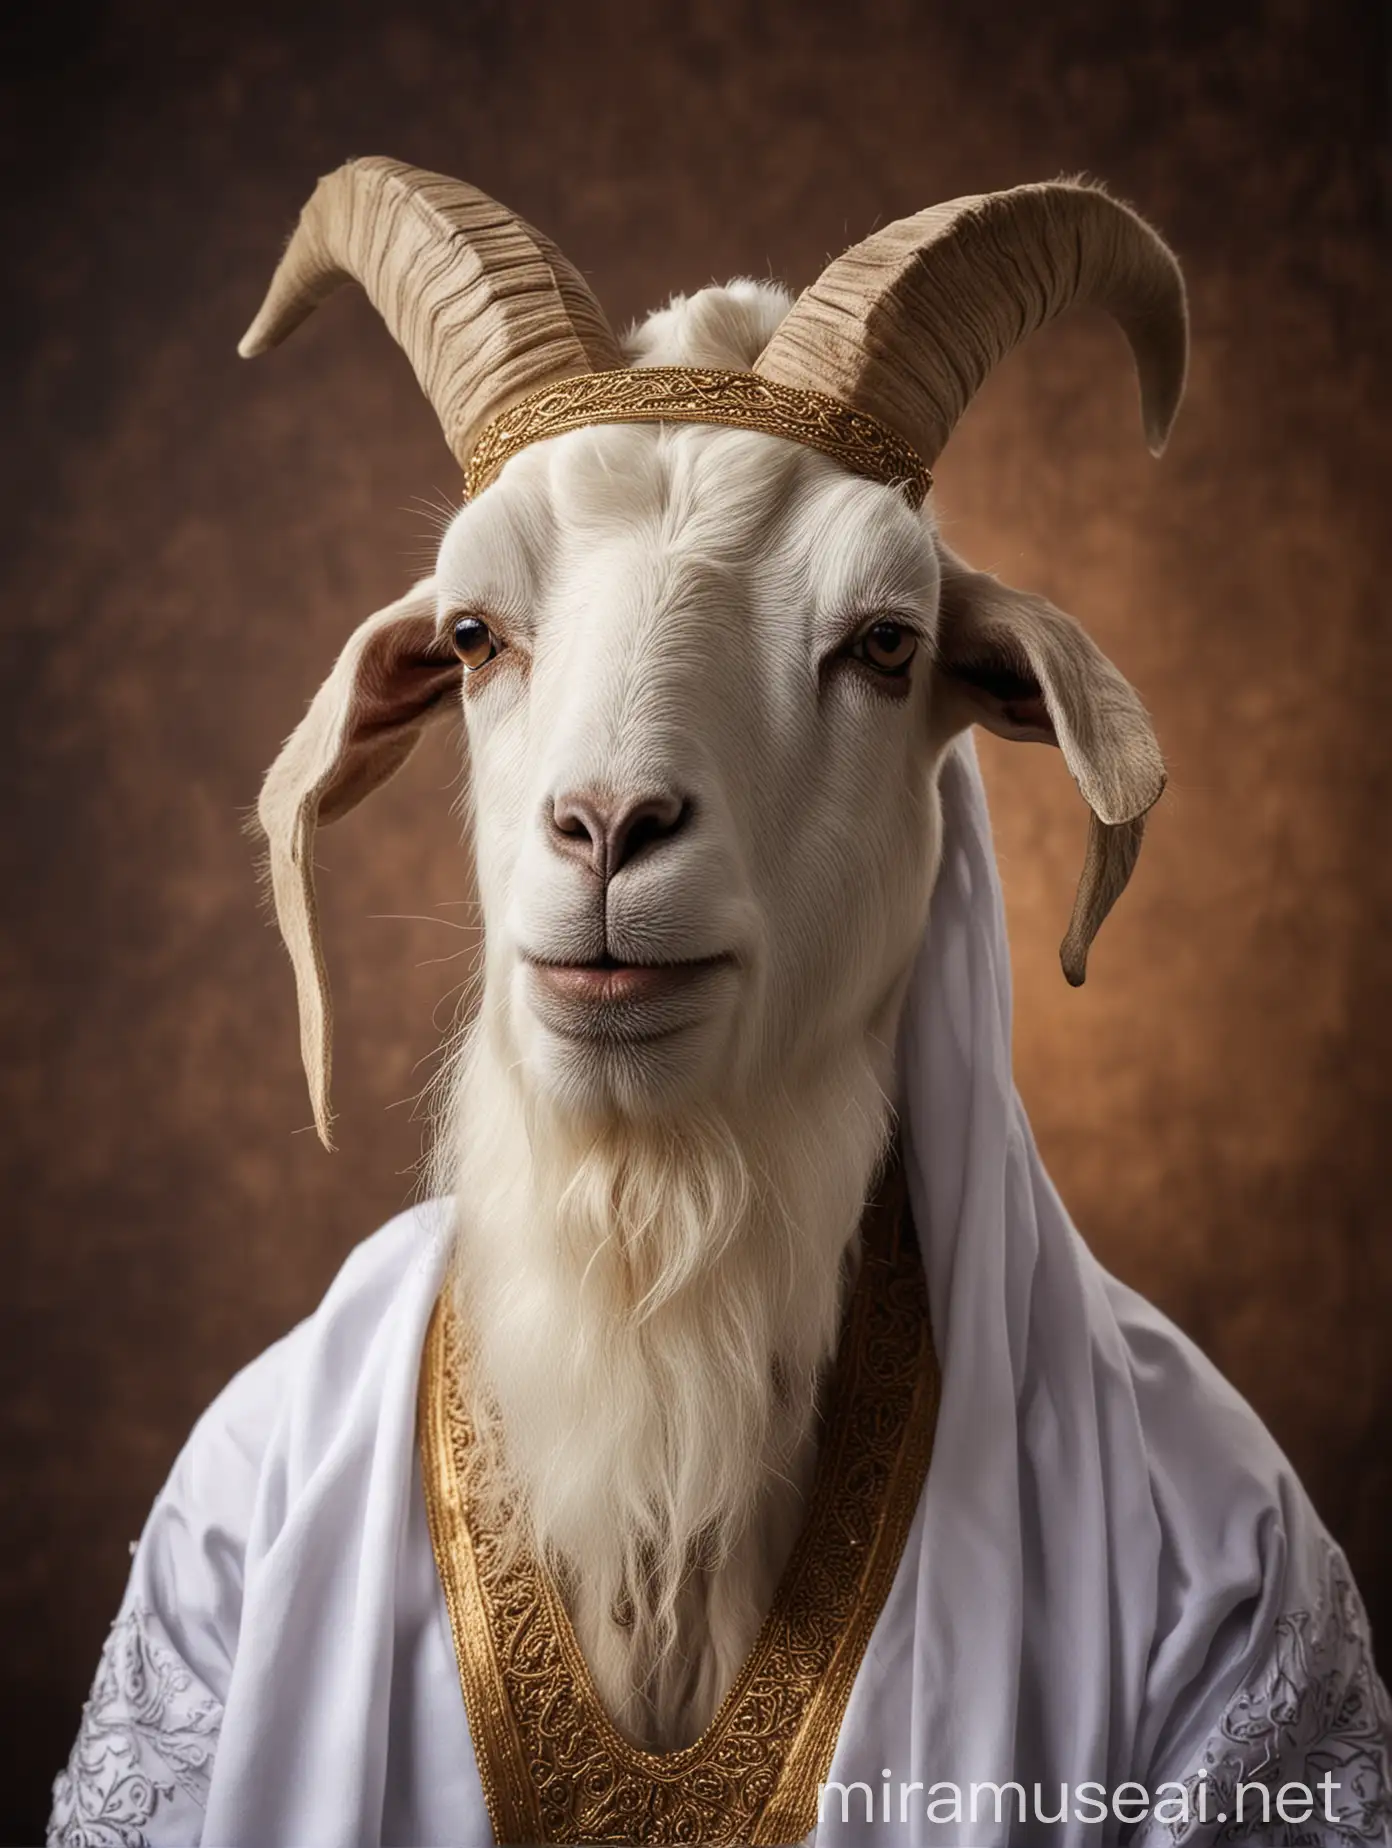 Muslim Goat in Sheikh Costume Celebrating Eid alAdha